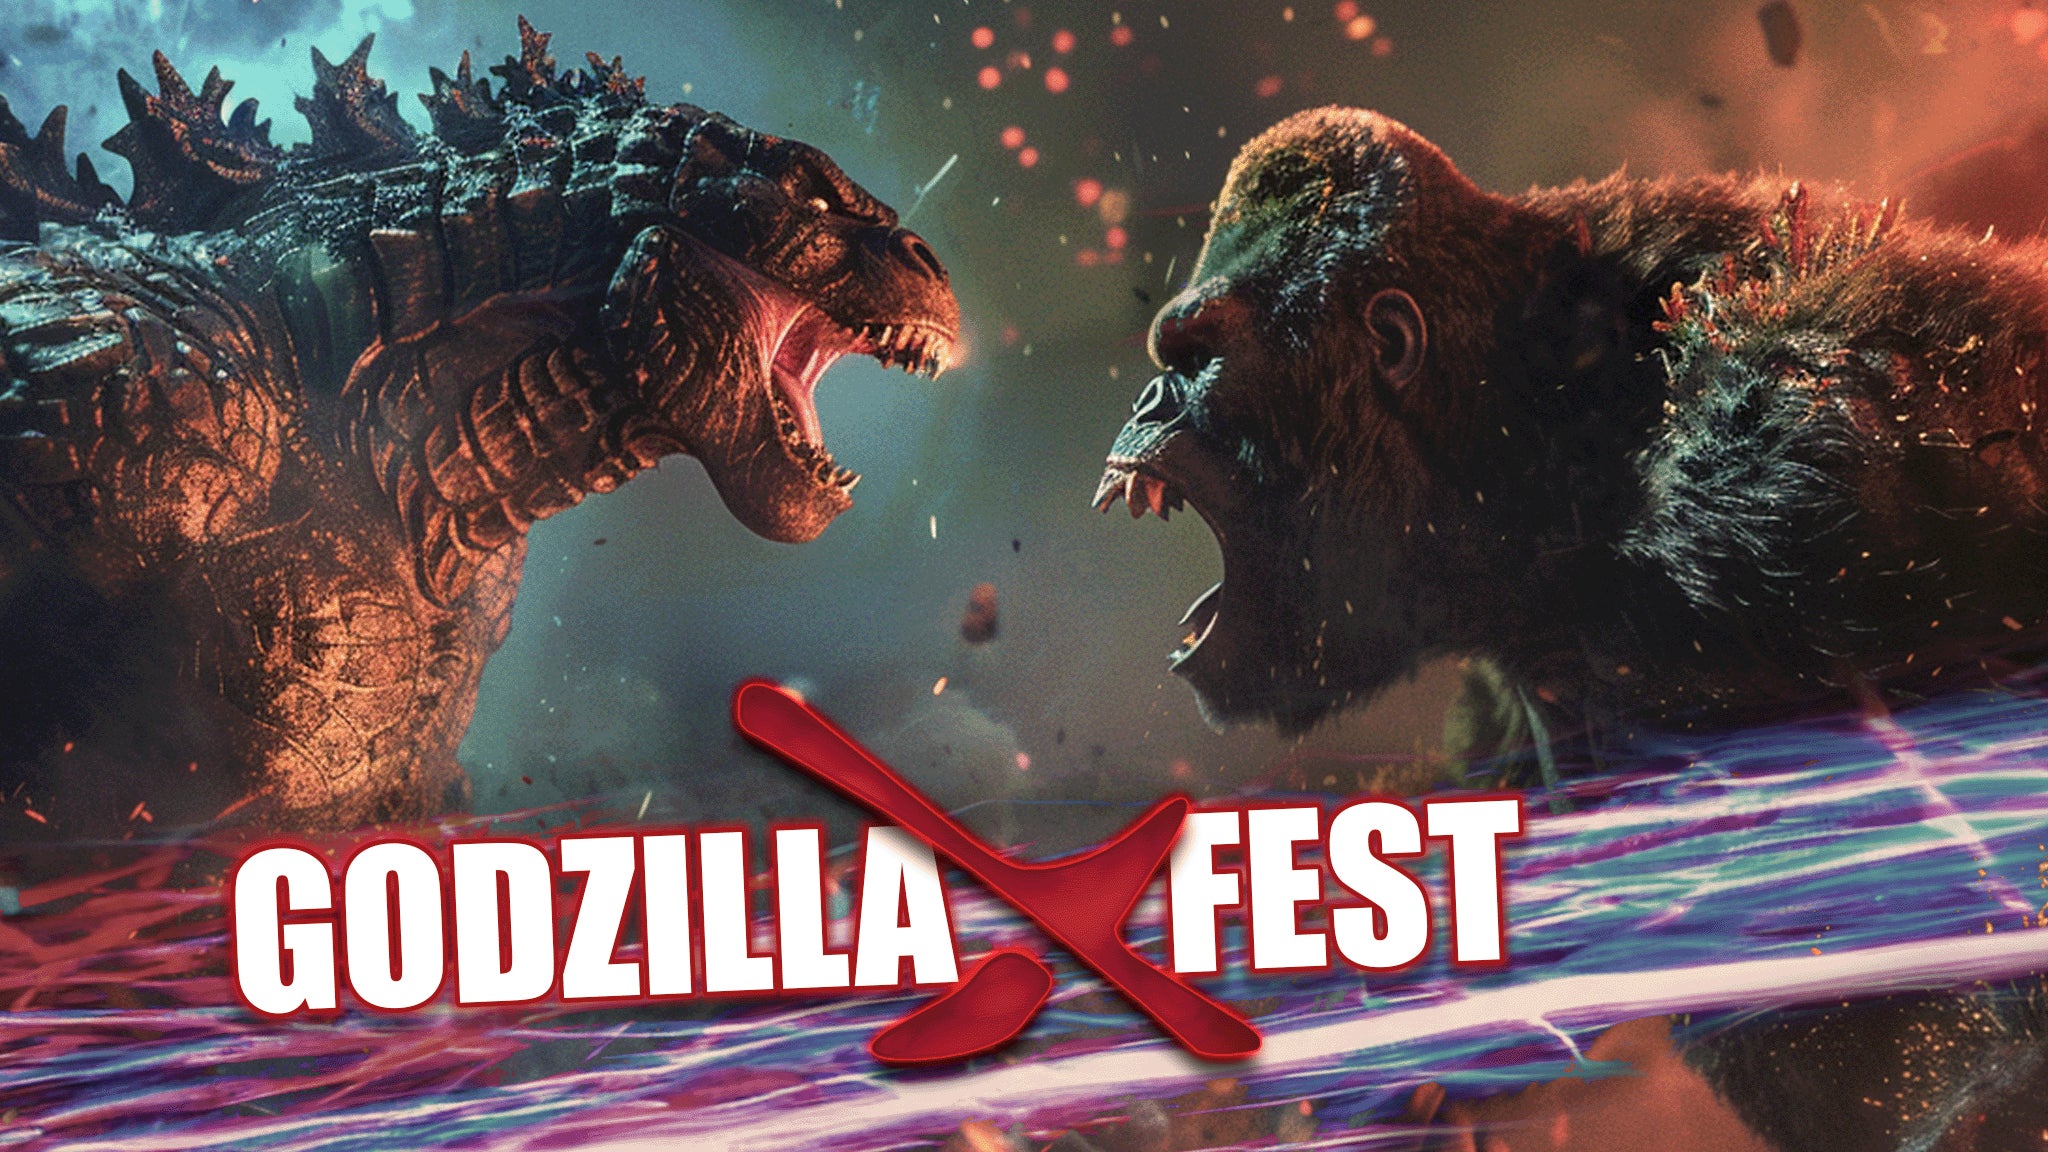 Godzilla X Fest